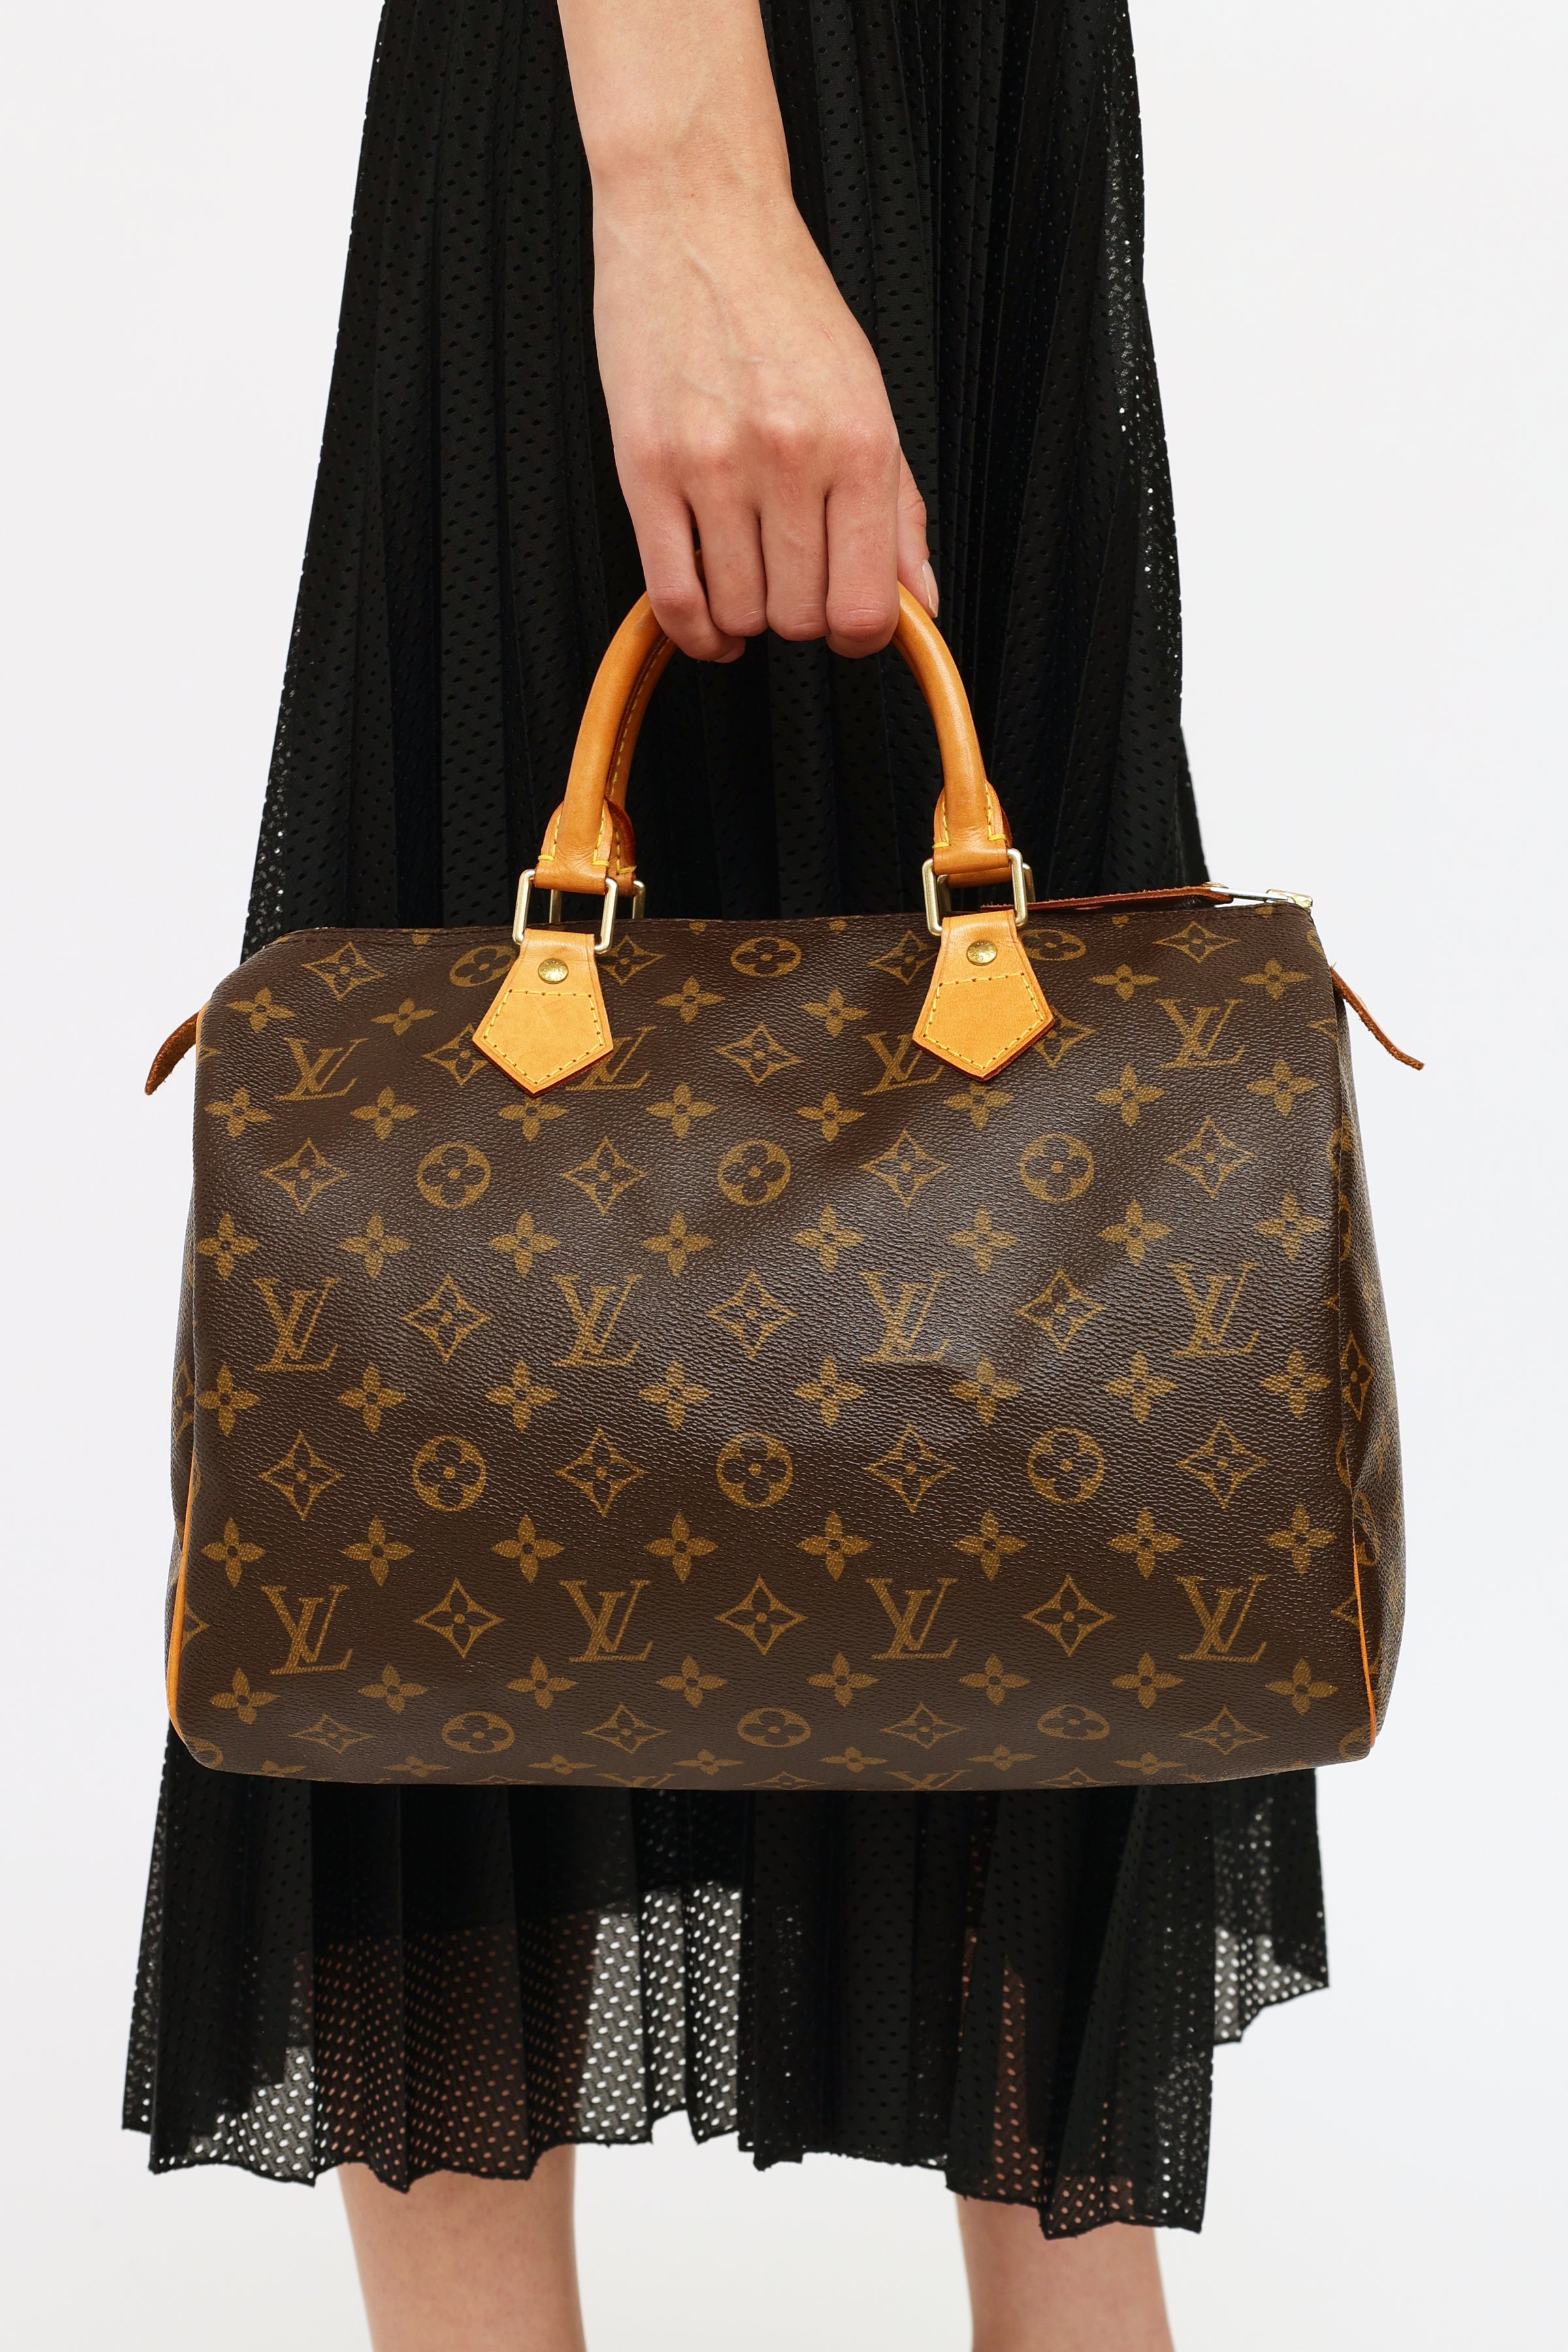 Louis Vuitton Speedy Shoulder bag 368133